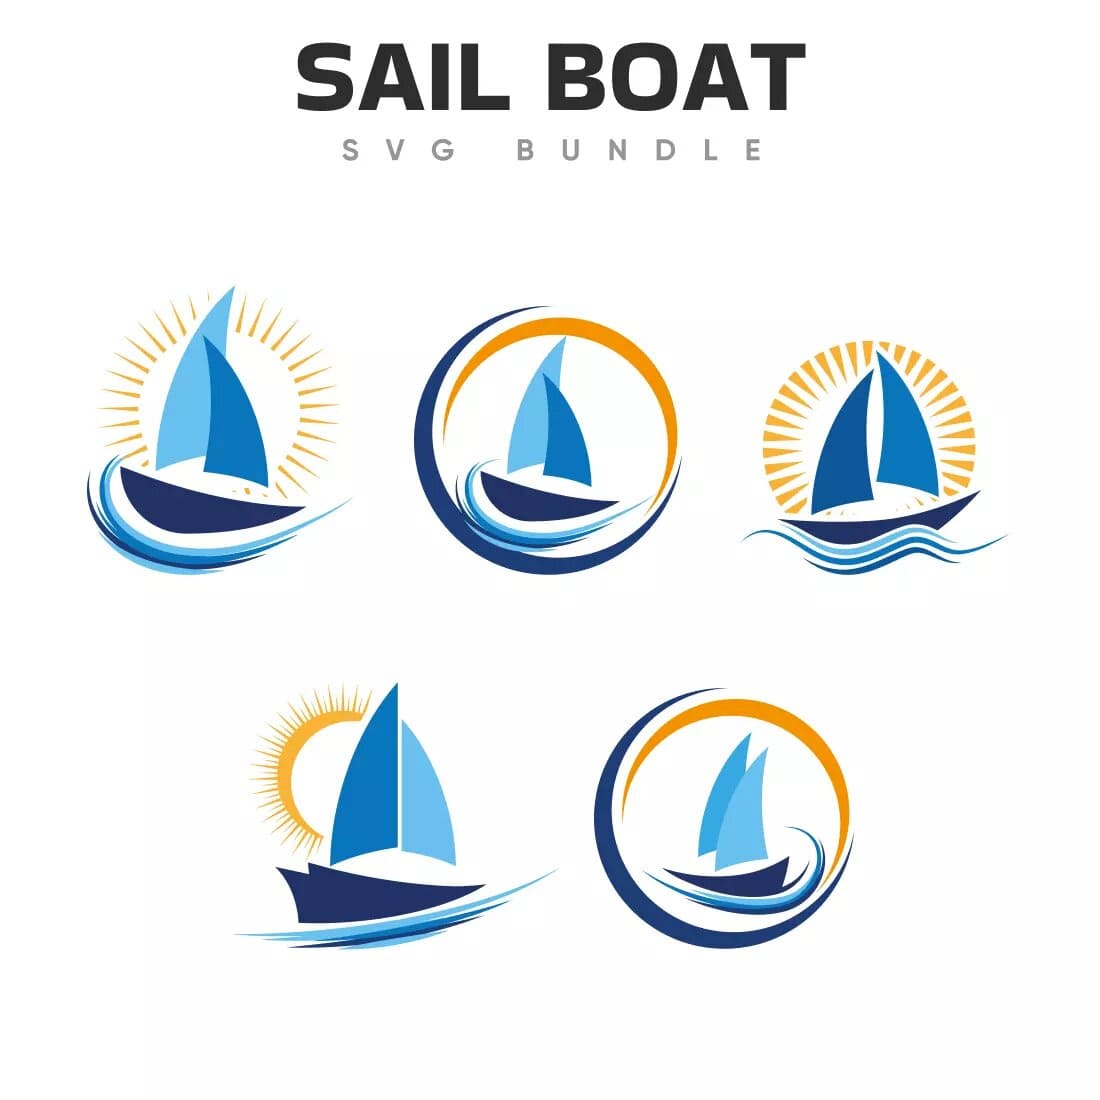 Sail Boat SVG Bundle Preview 6.